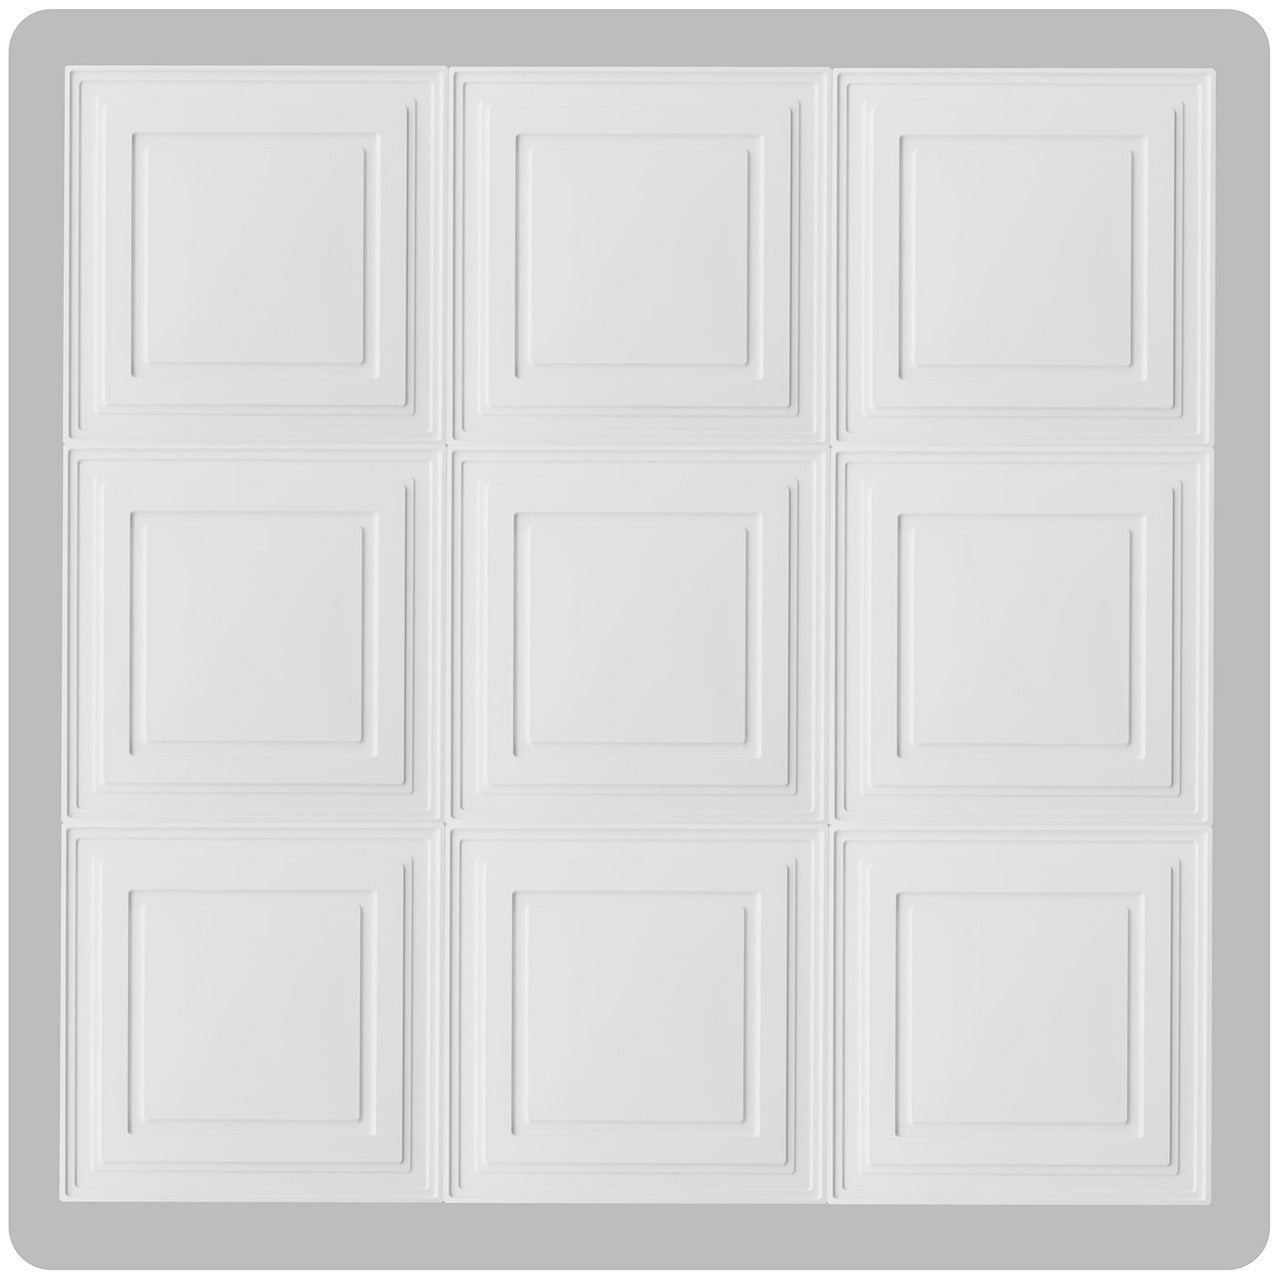 white ceiling tile systems - 2'x2' PVC panels